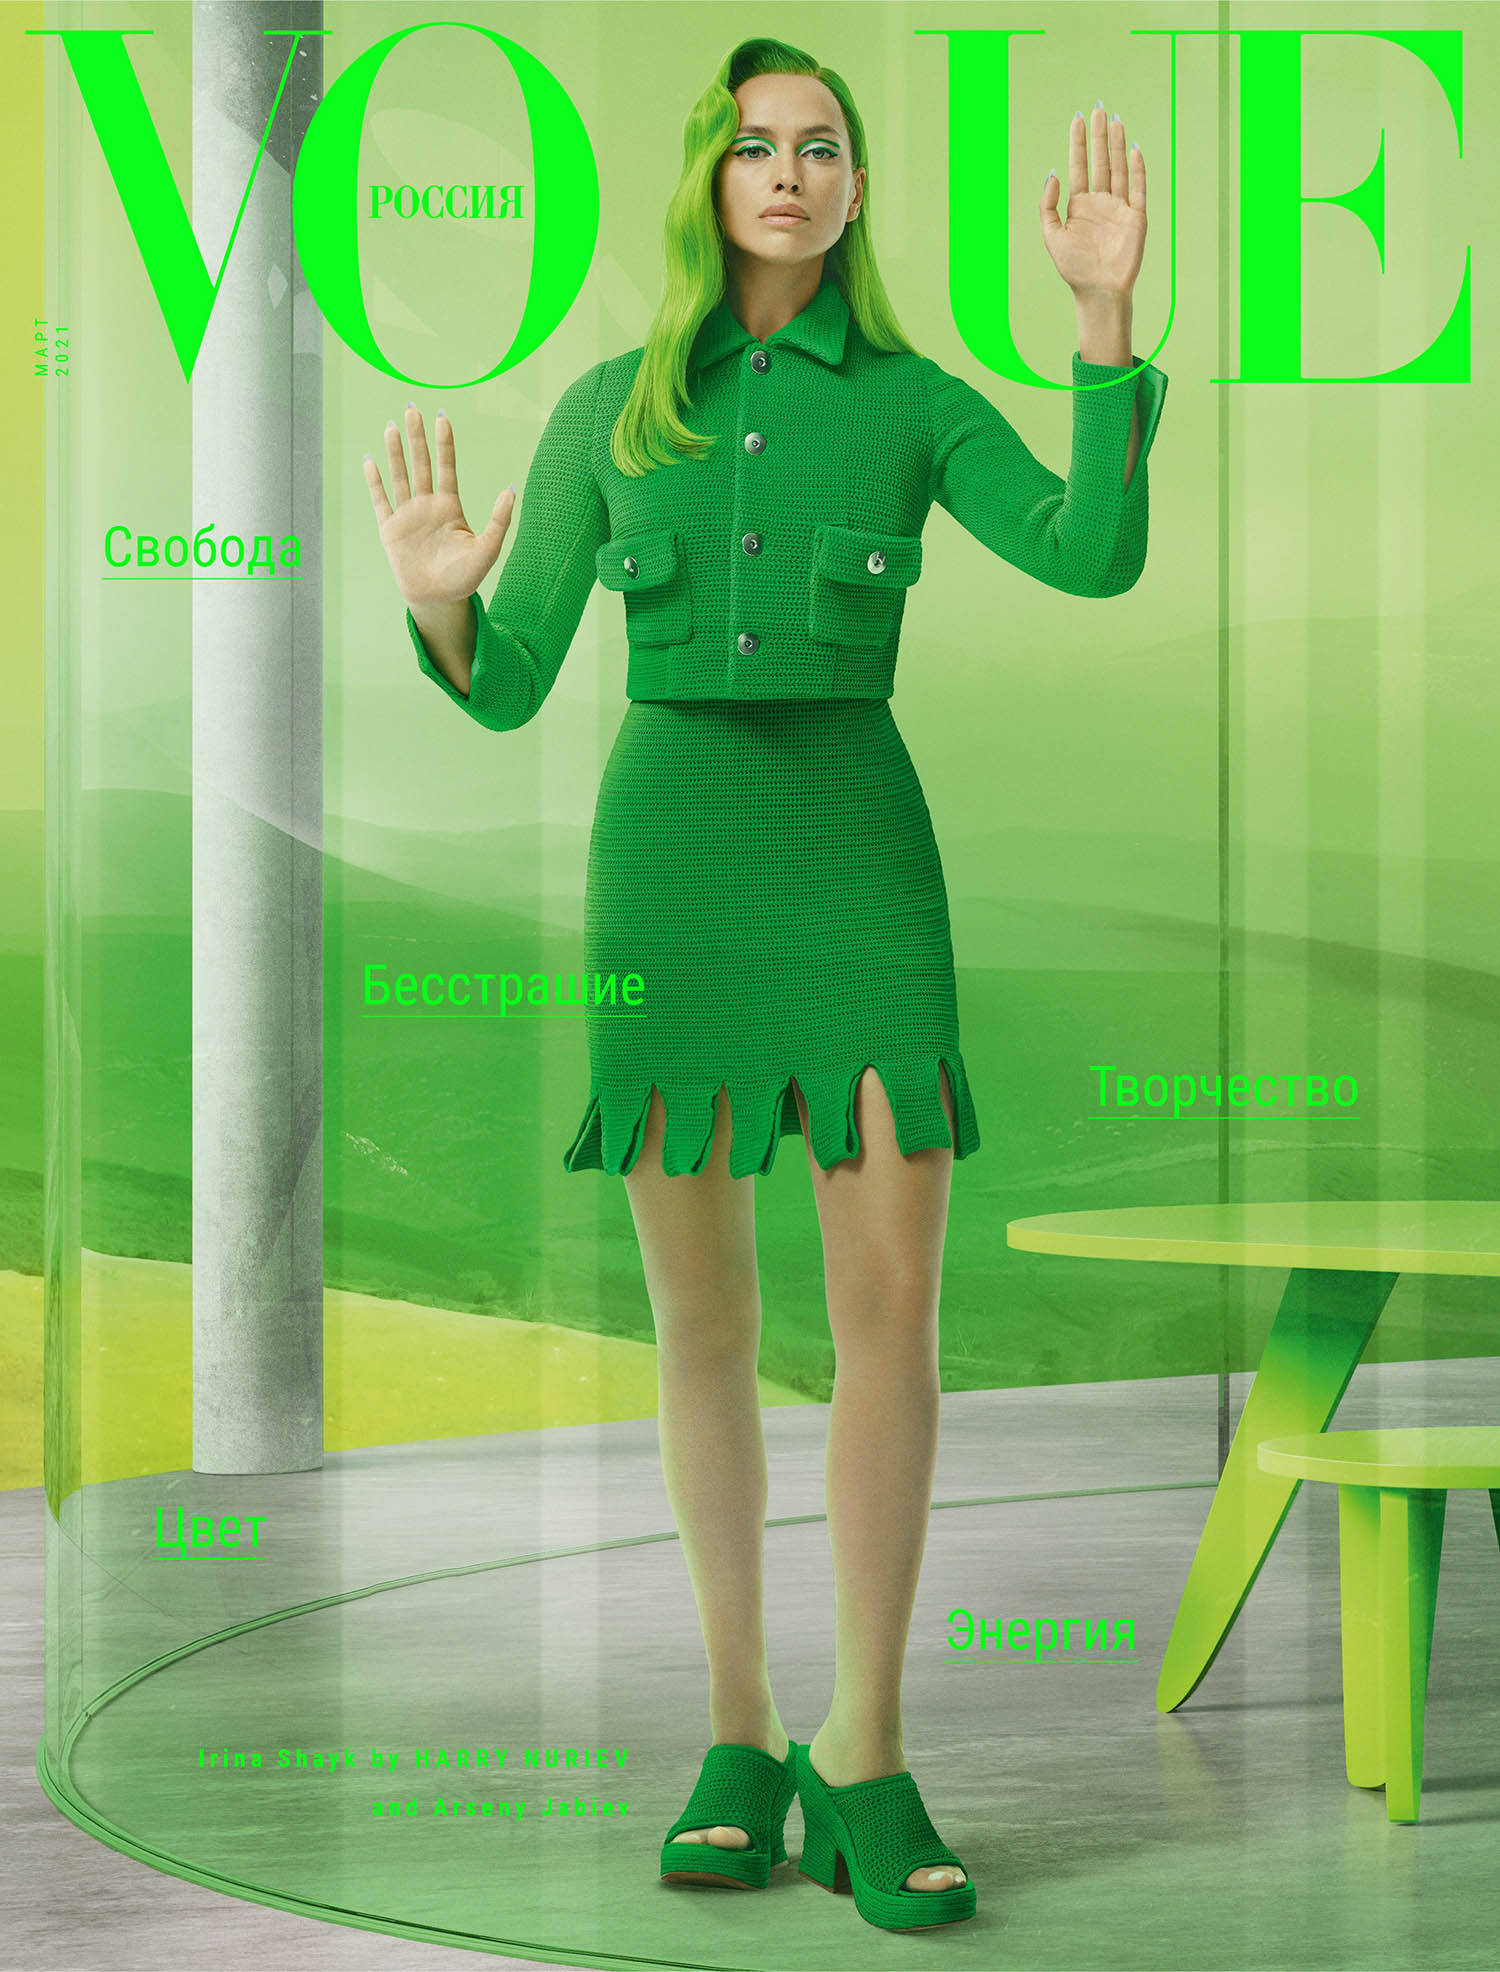 Irina Shayk covers Vogue Russia March 2021 by Arseny Jabiev